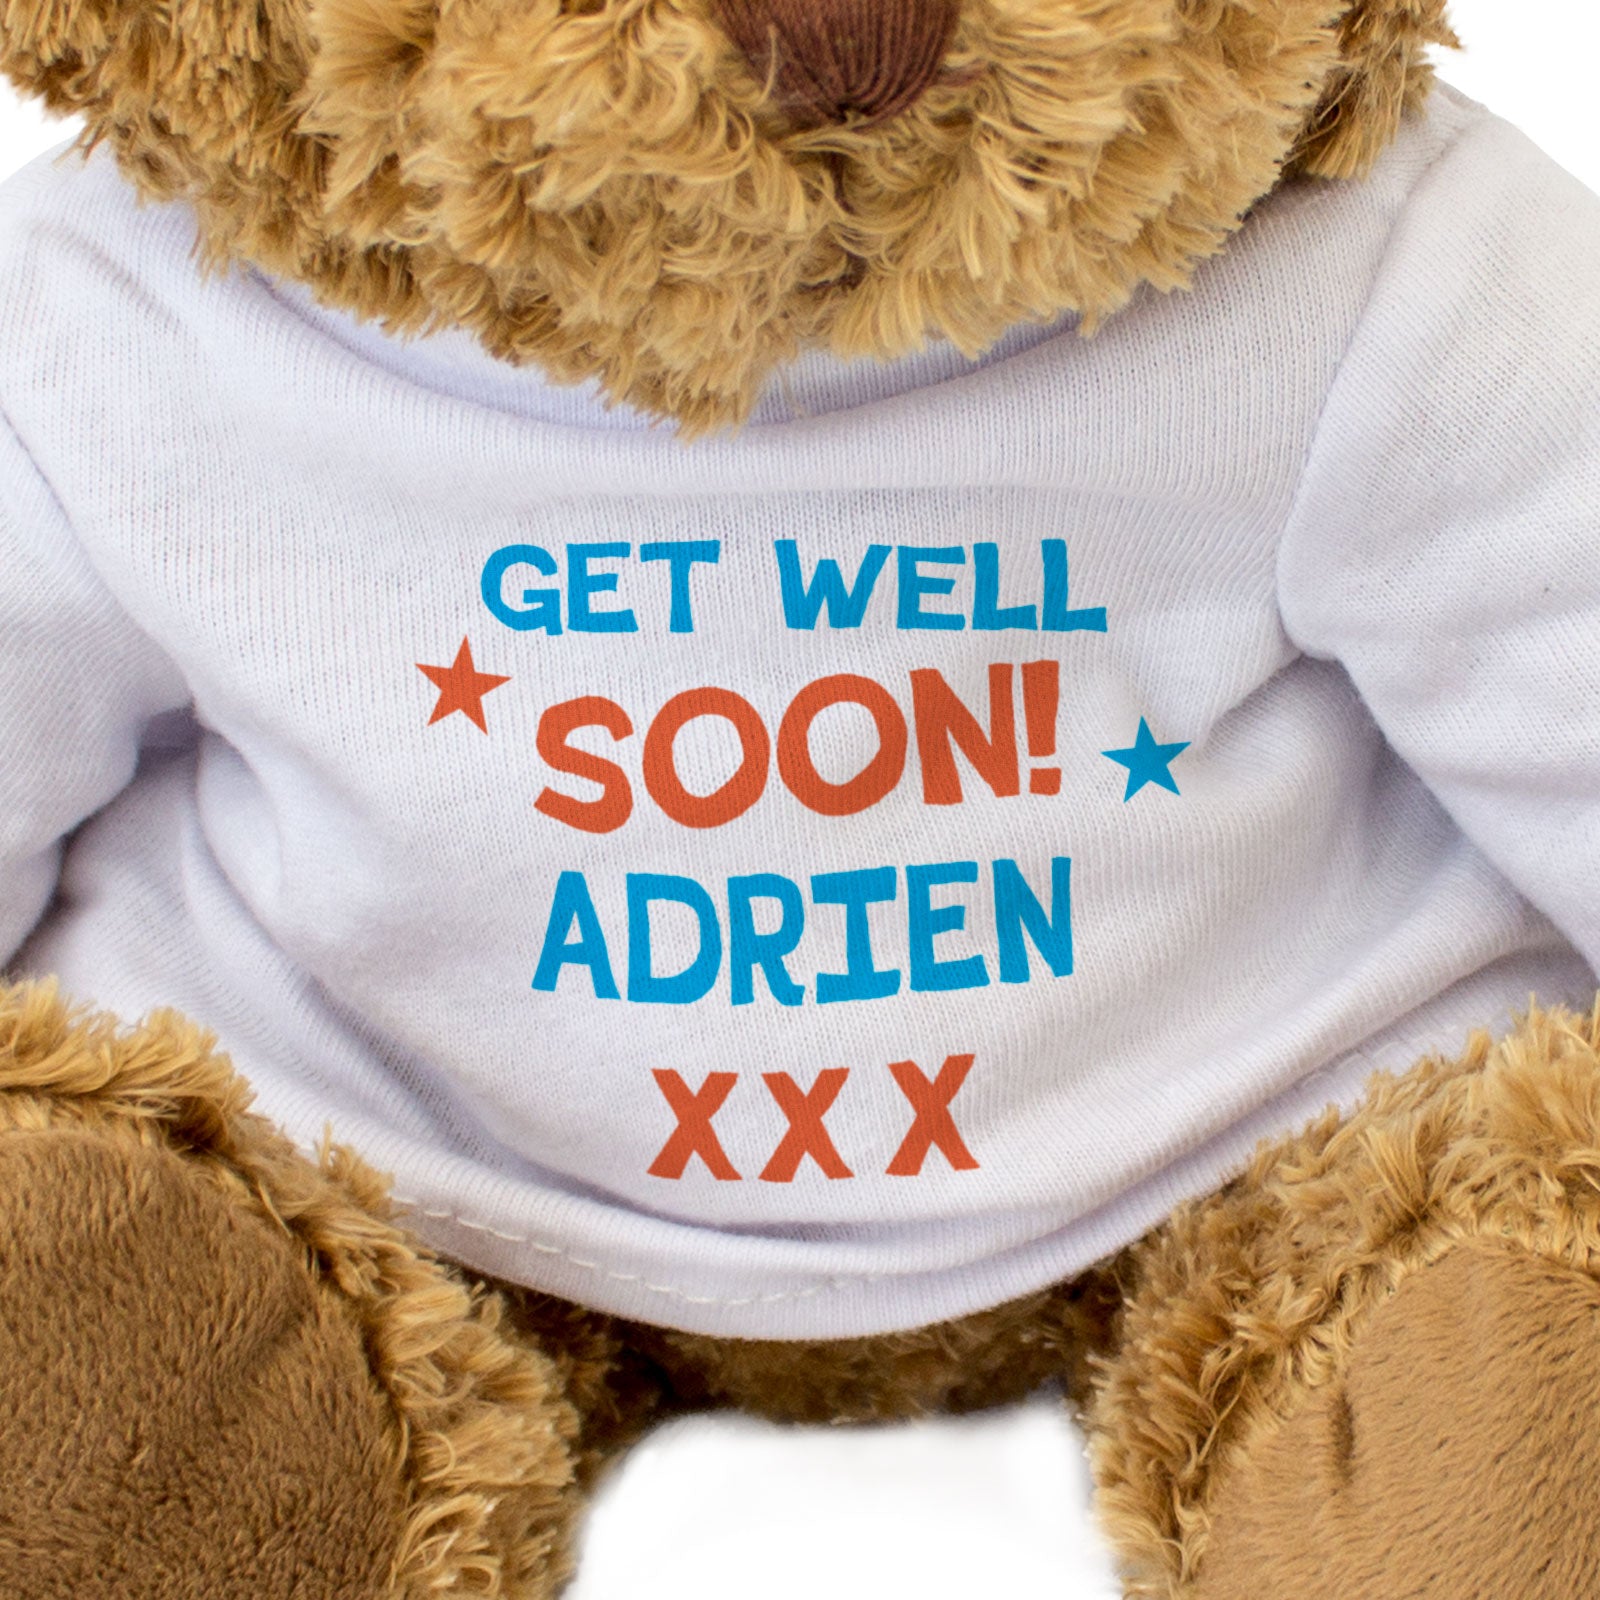 Get Well Soon Adrien - Teddy Bear